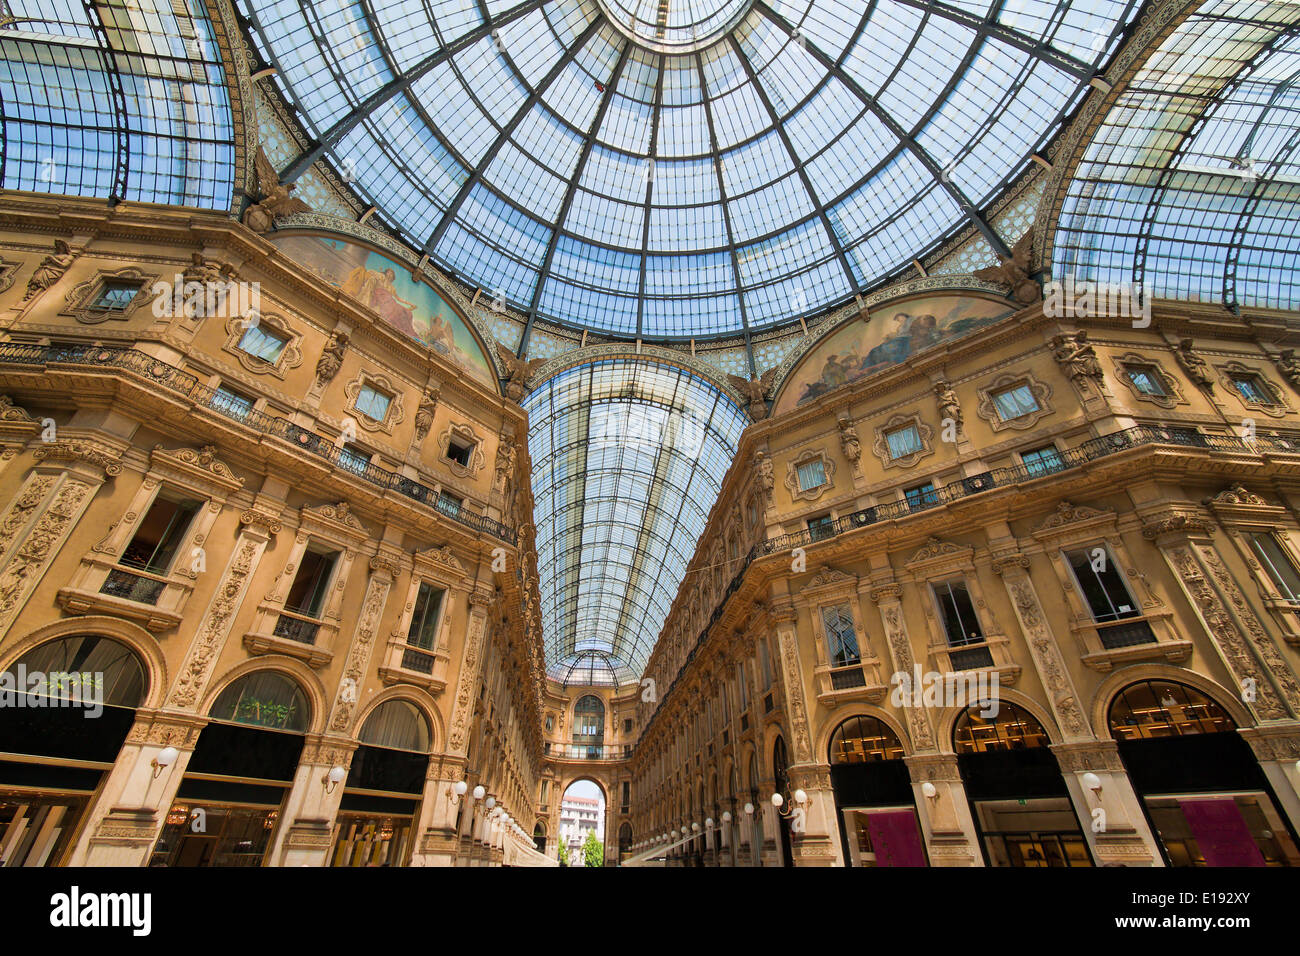 Einkaufszentrum Galleria Vittorio Emanuele in Mailand, Italien. Lombardei. Foto Stock